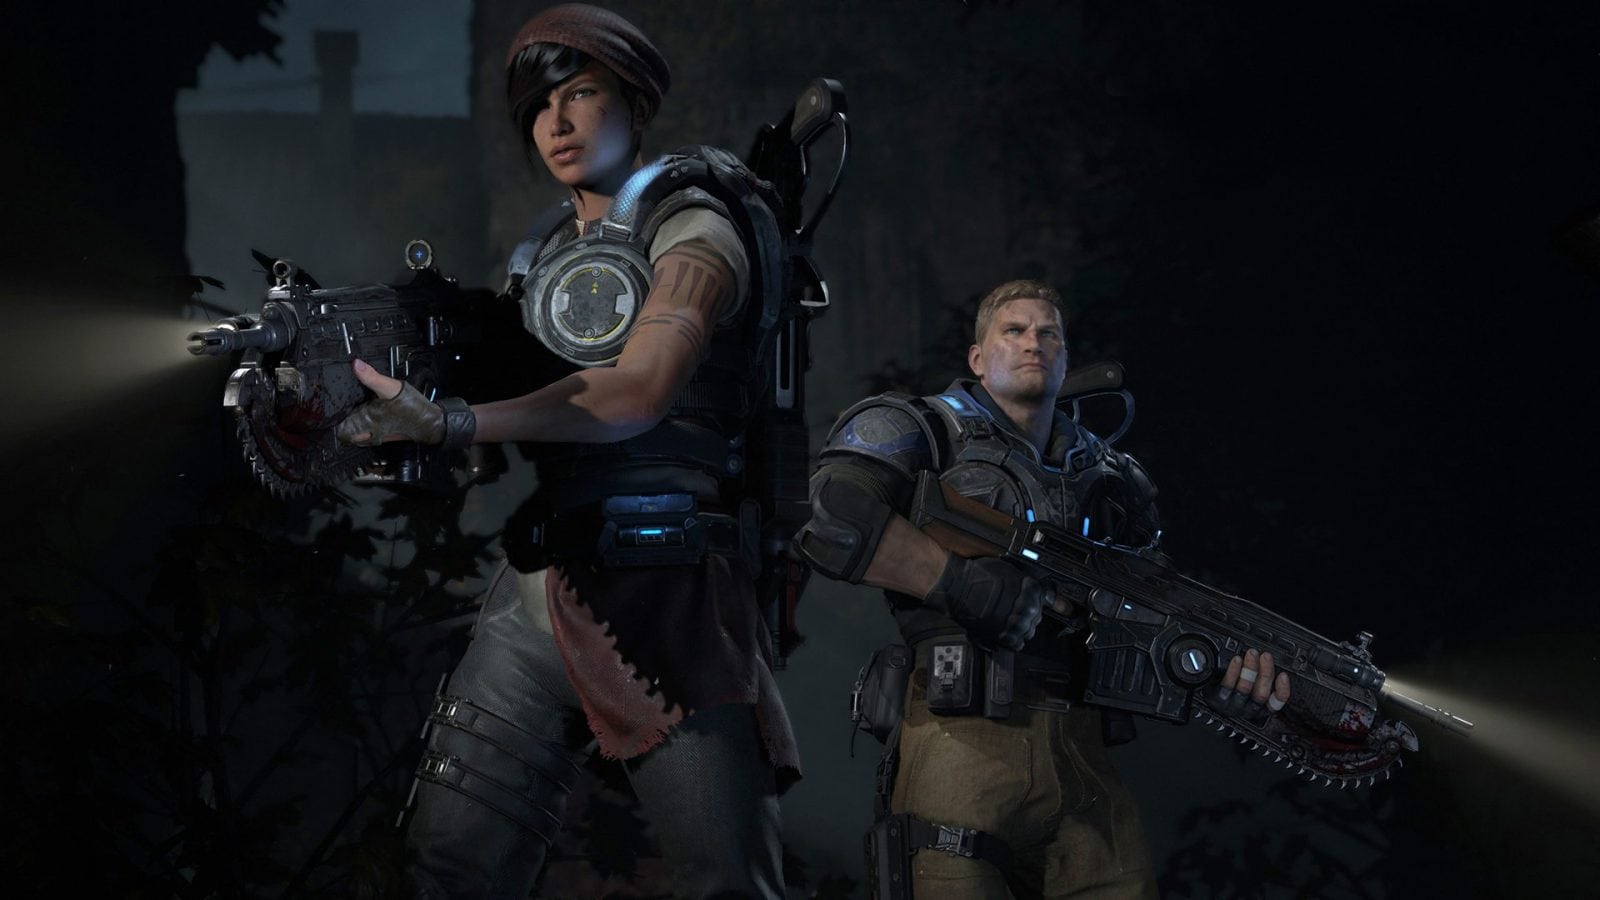 Estúdio de Gears of War está recrutando para novo game da série